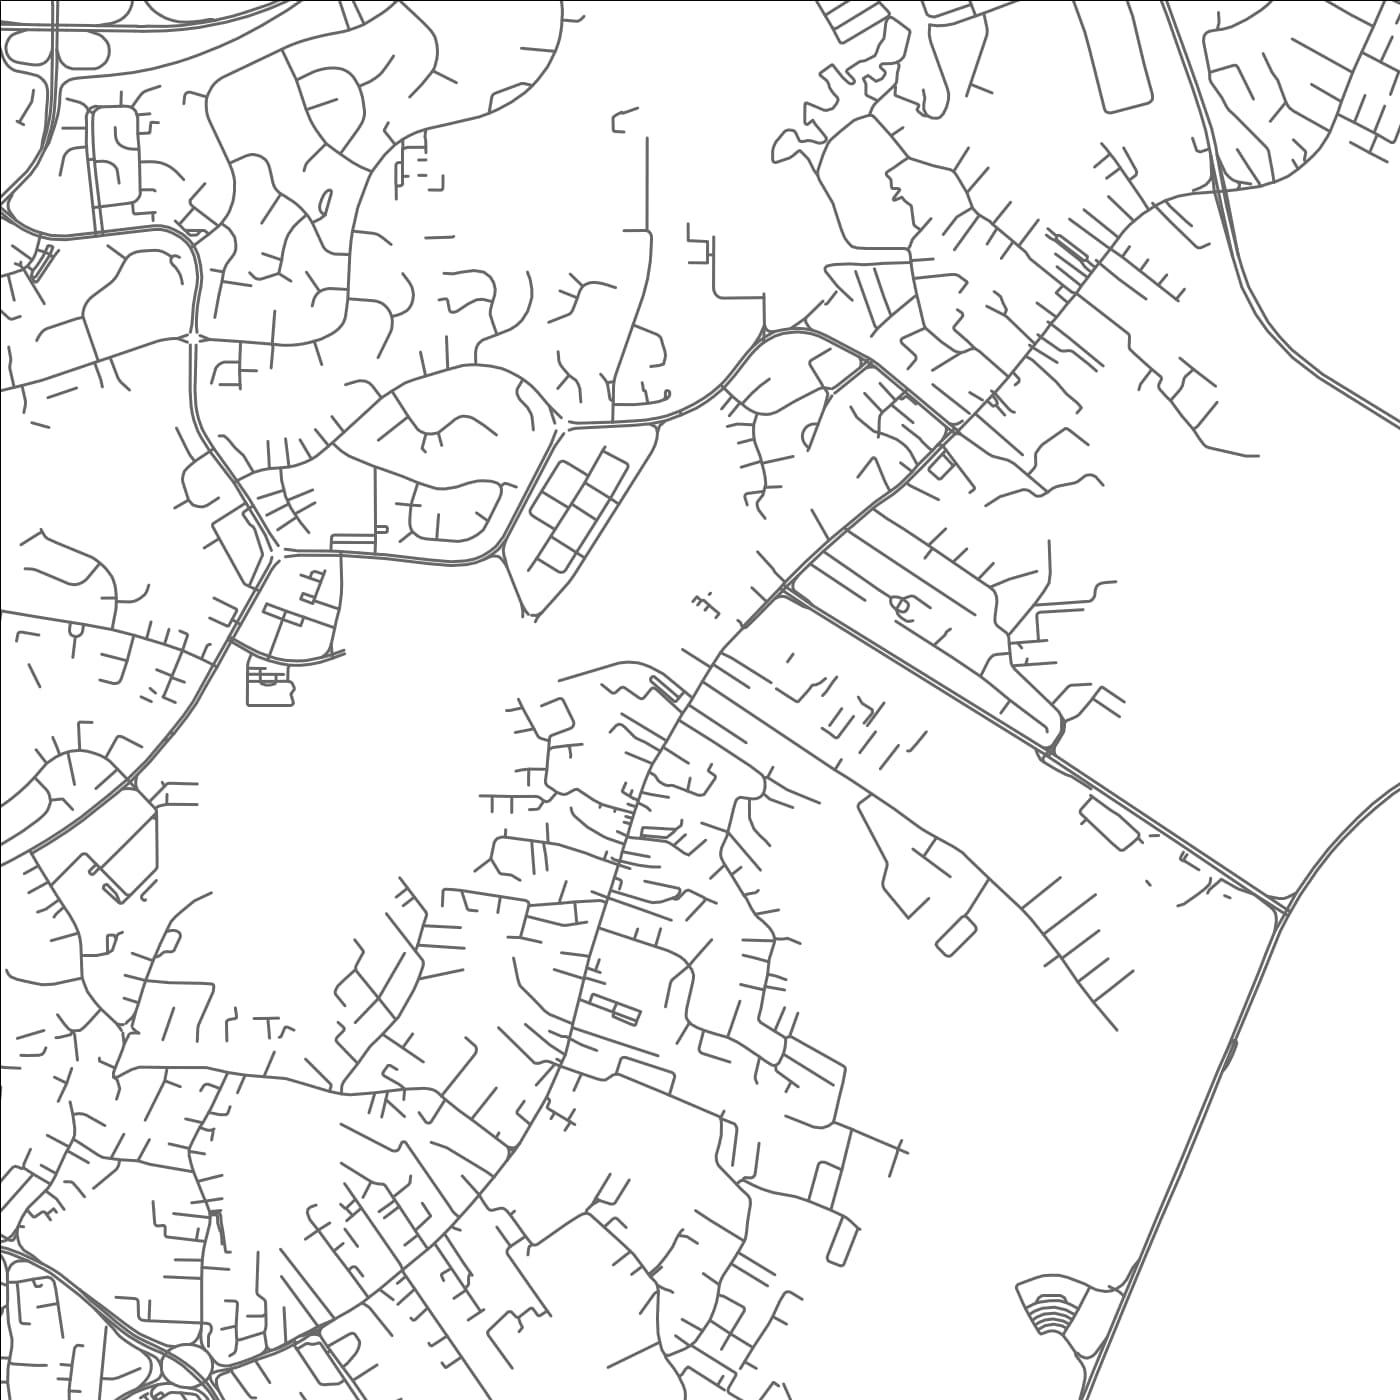 ROAD MAP OF KAMPONG SUNGAI HANCHING, BRUNEI BY MAPBAKES